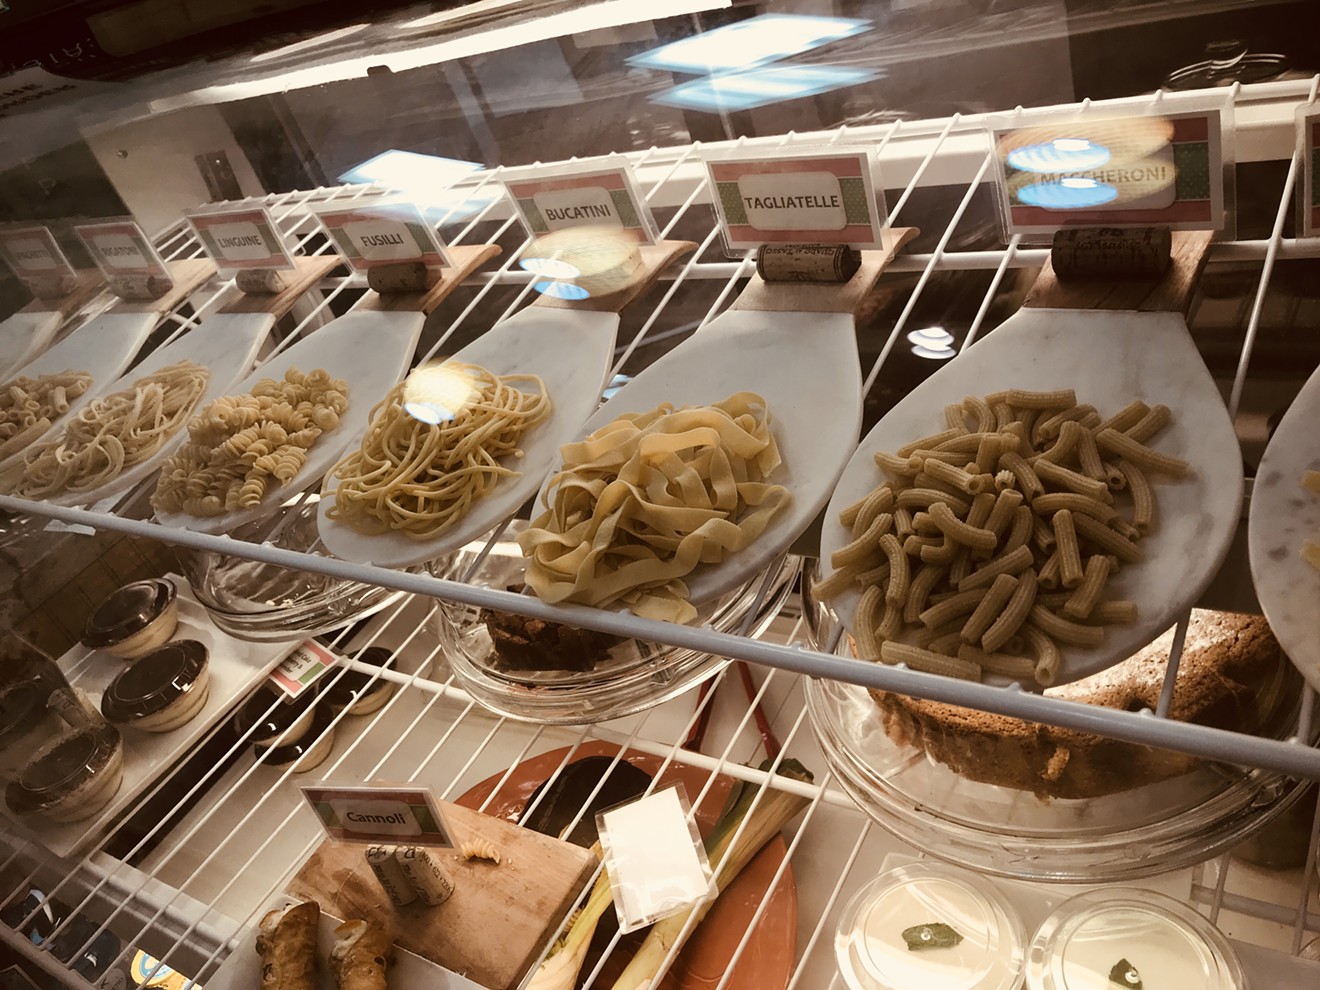 Fresh pasta on display.